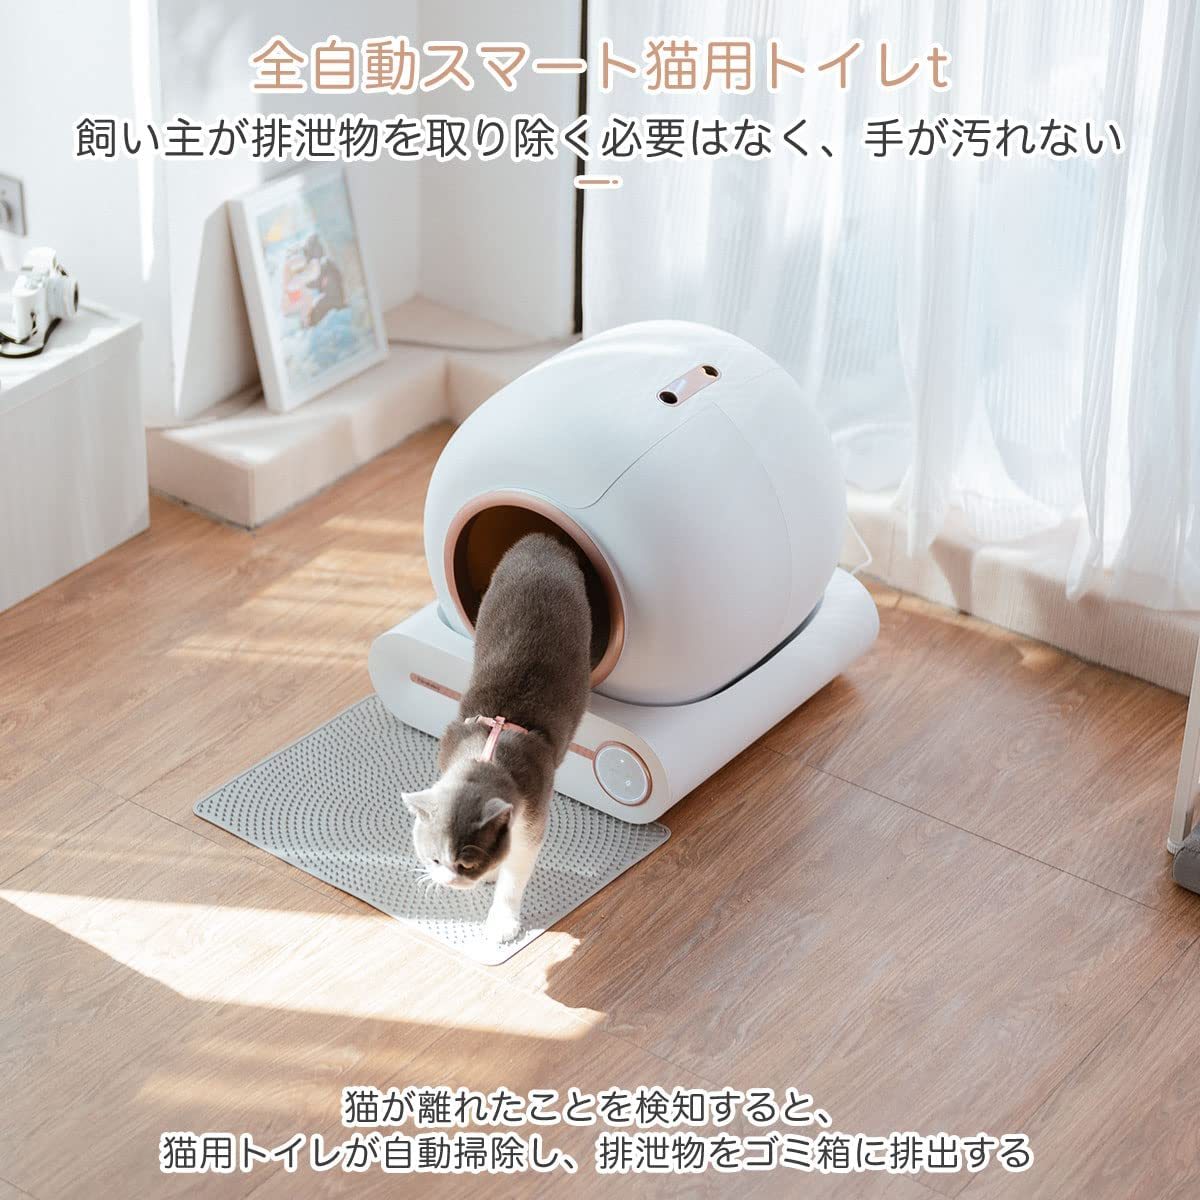 Pandaloli トイレ 猫 自動トイレ スマホ管理 センサー付き 飛散防止 自動掃除 専用APP IOS/Android対応